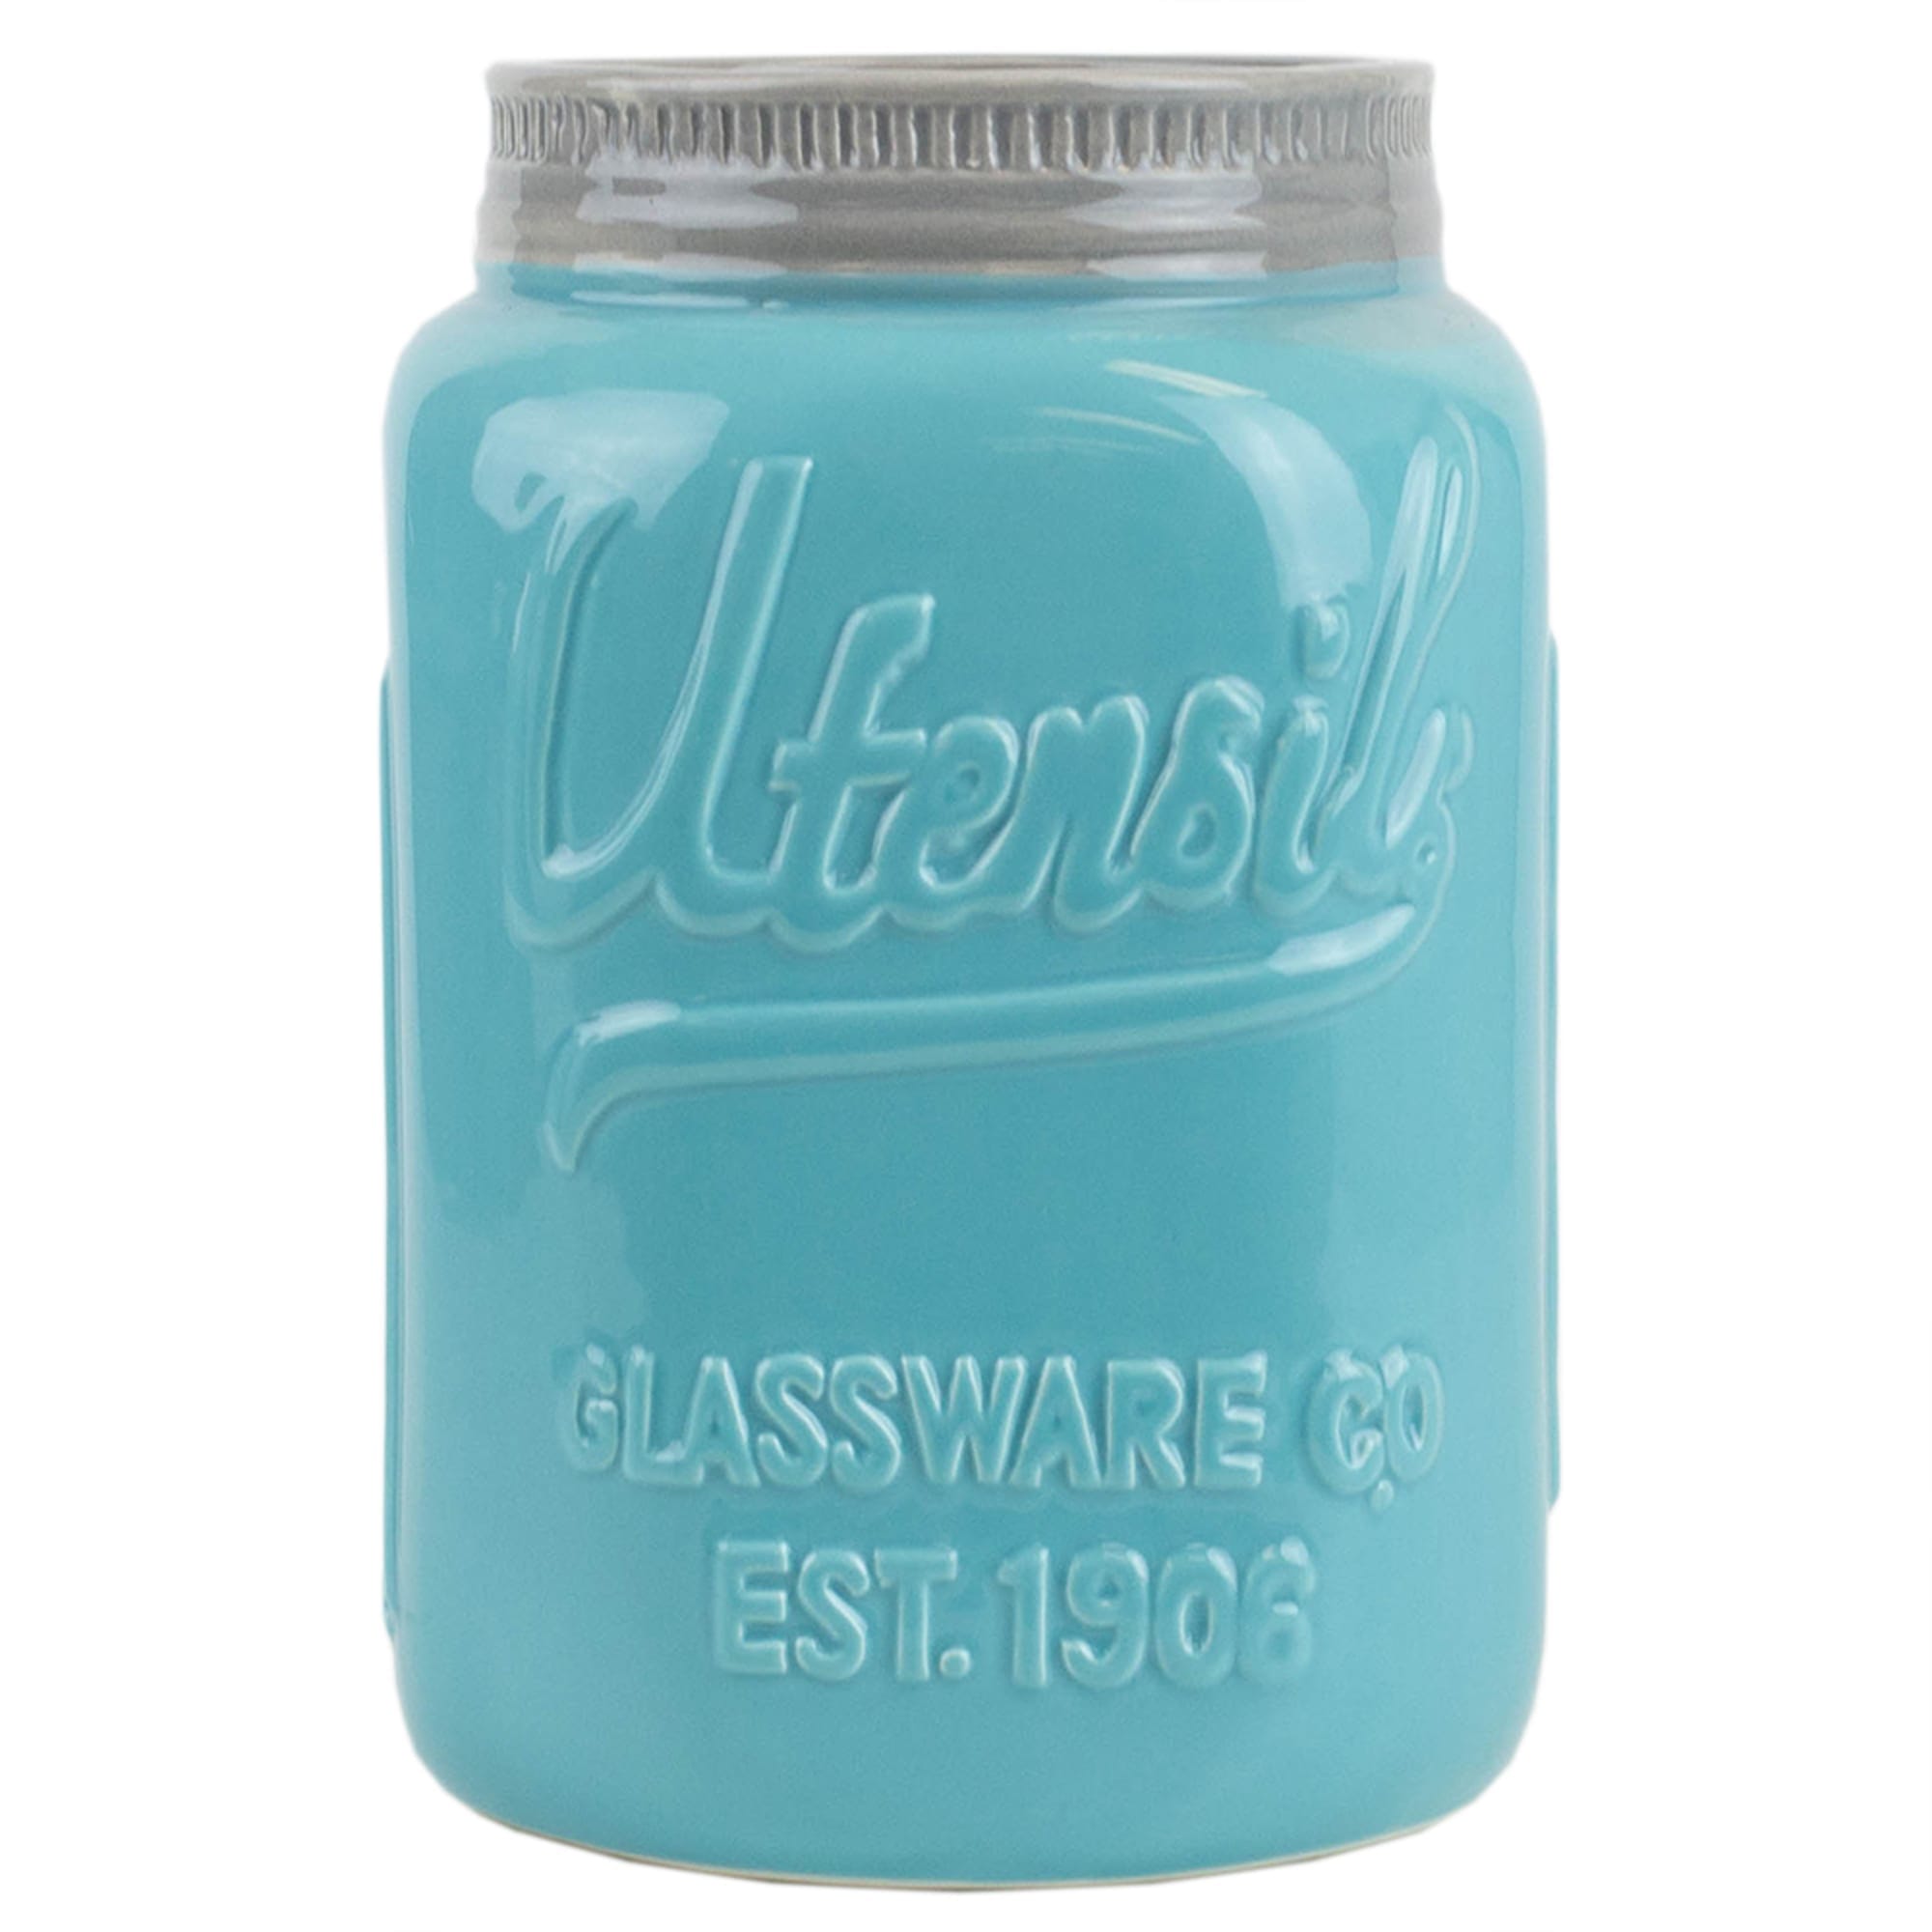 Glazed Ceramic Utensil Crock, Turquoise, KITCHEN ORGANIZATION